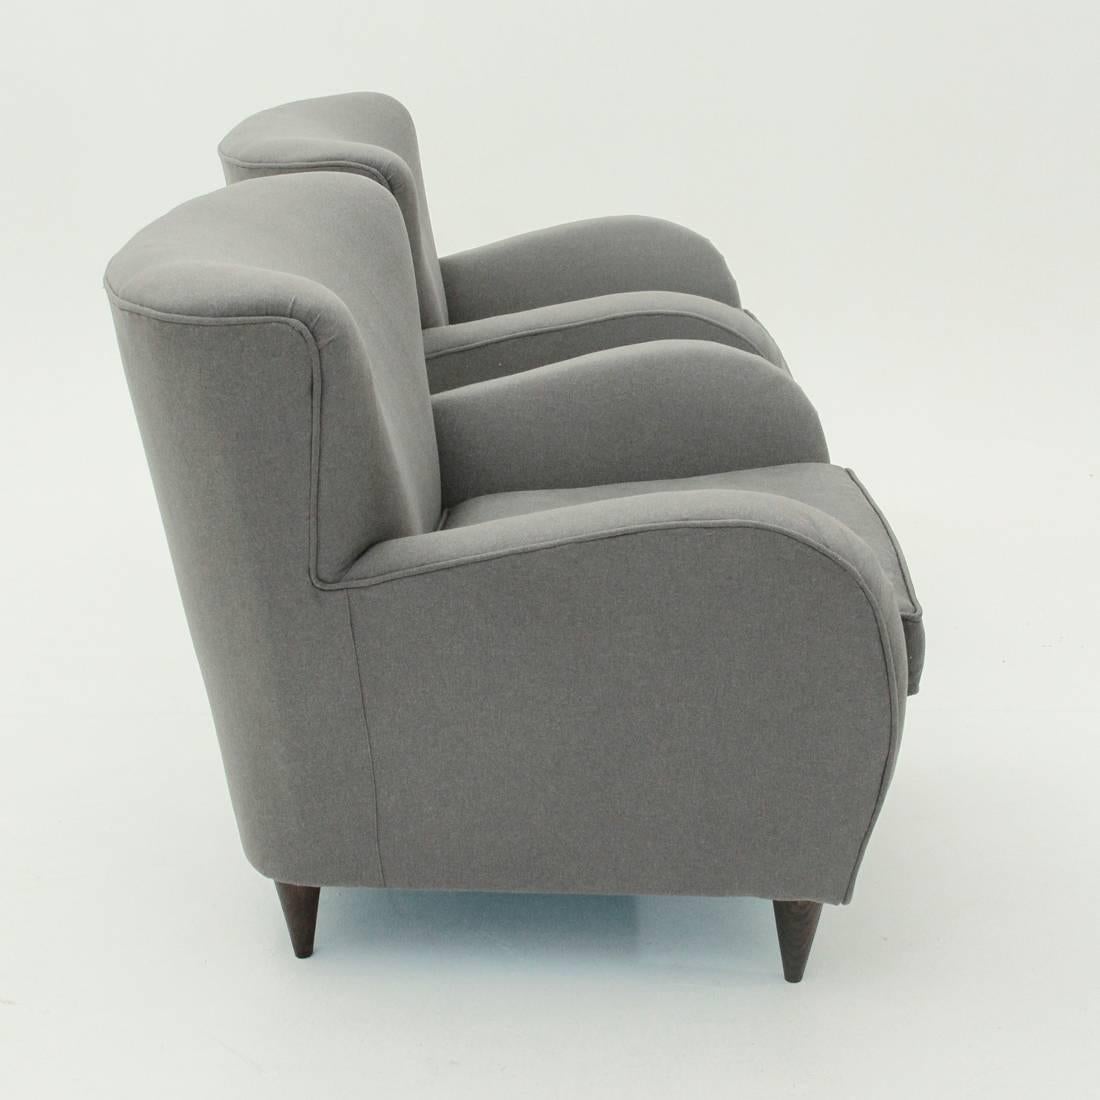 1950s grey armchairs